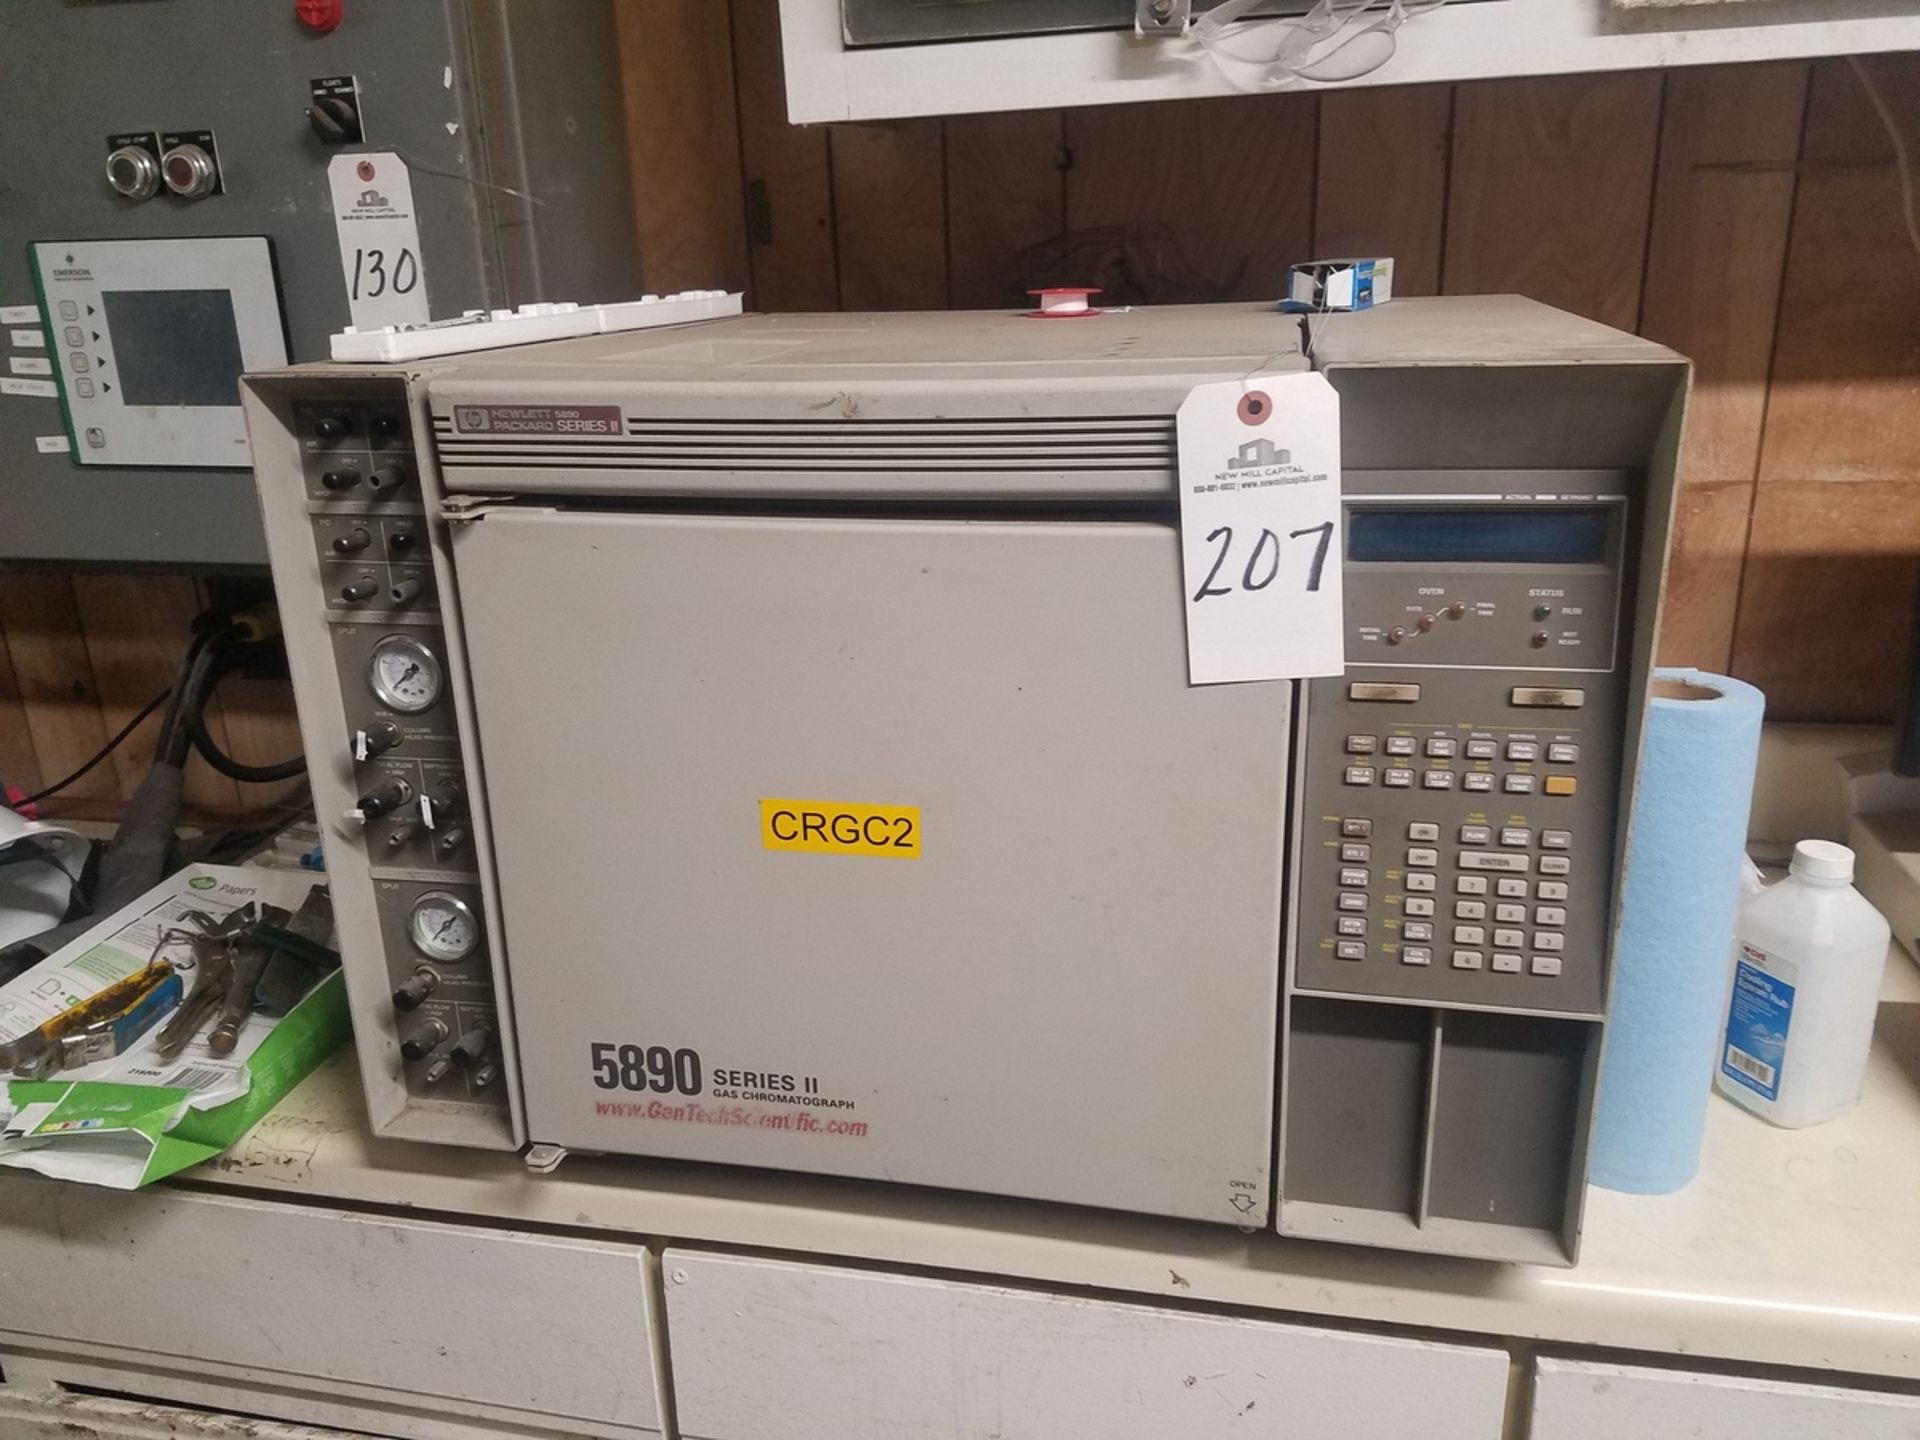 Hewlett Packard Gas Chromatograph, M# 5890 GCD Series II | Rig Fee: $200